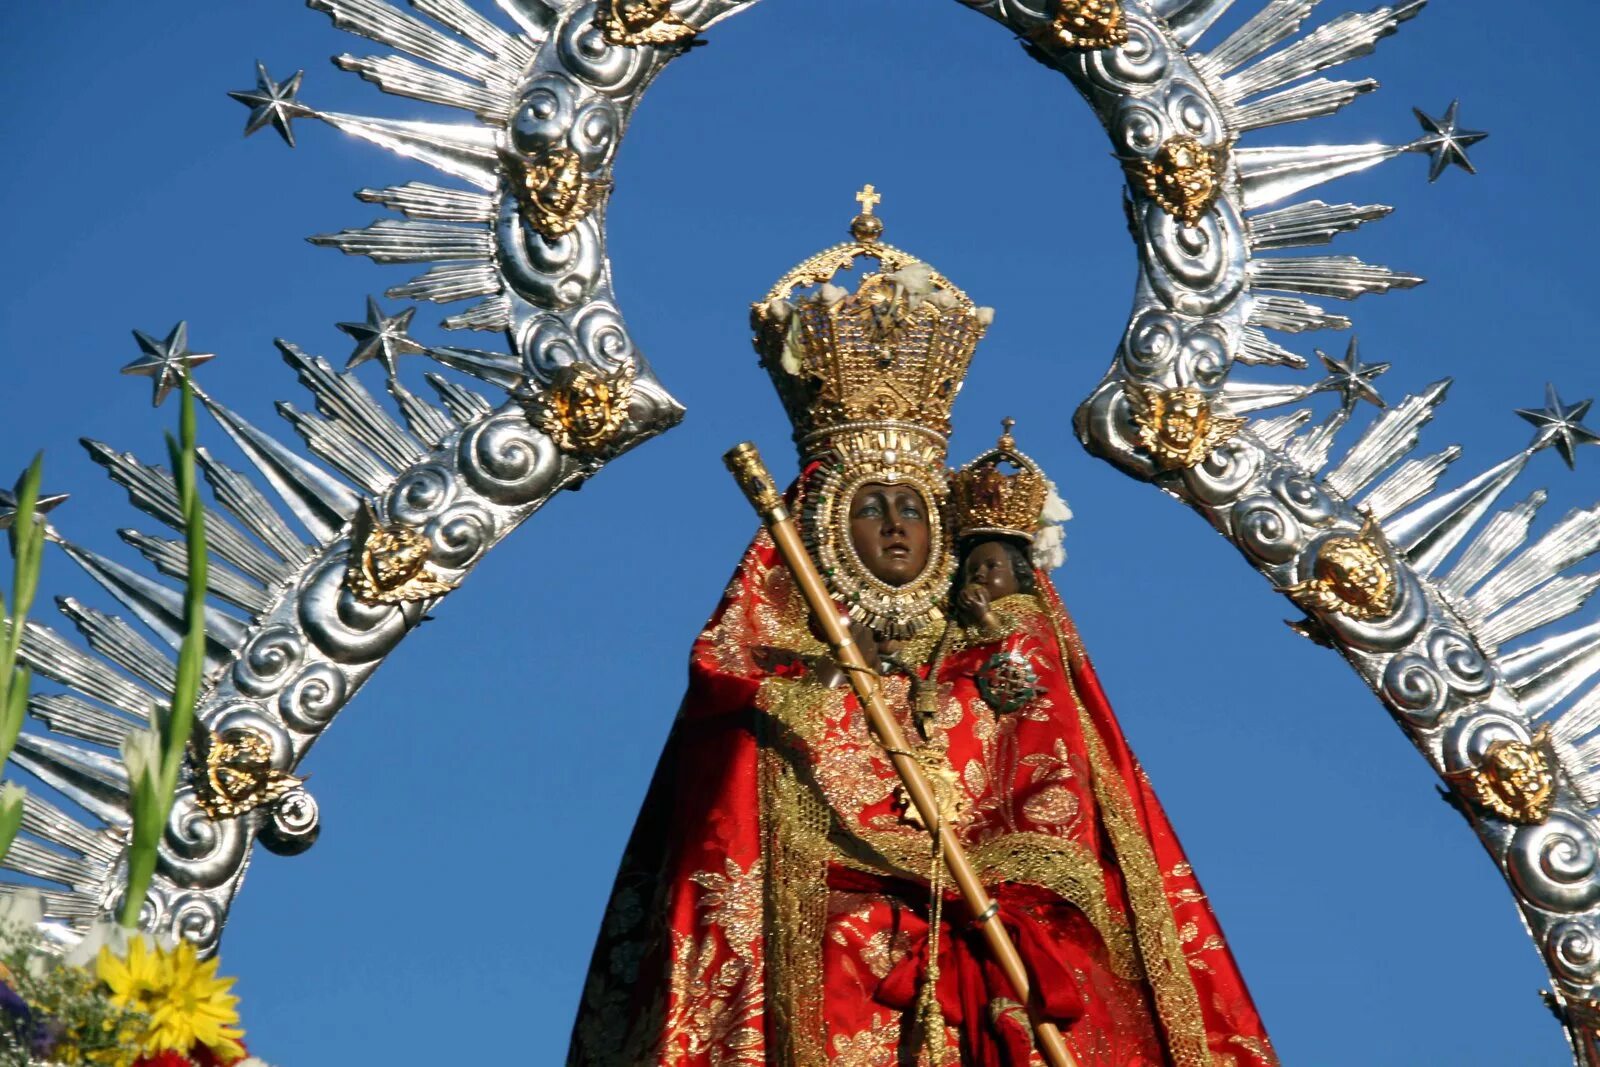 La virgen москва. Фестиваль Romeria de nuestra senora de le cabeza. Статуя Богоматери Нуэстра-сеньора-де-ла-Кабеса. La Virgen de Moscu пиво.